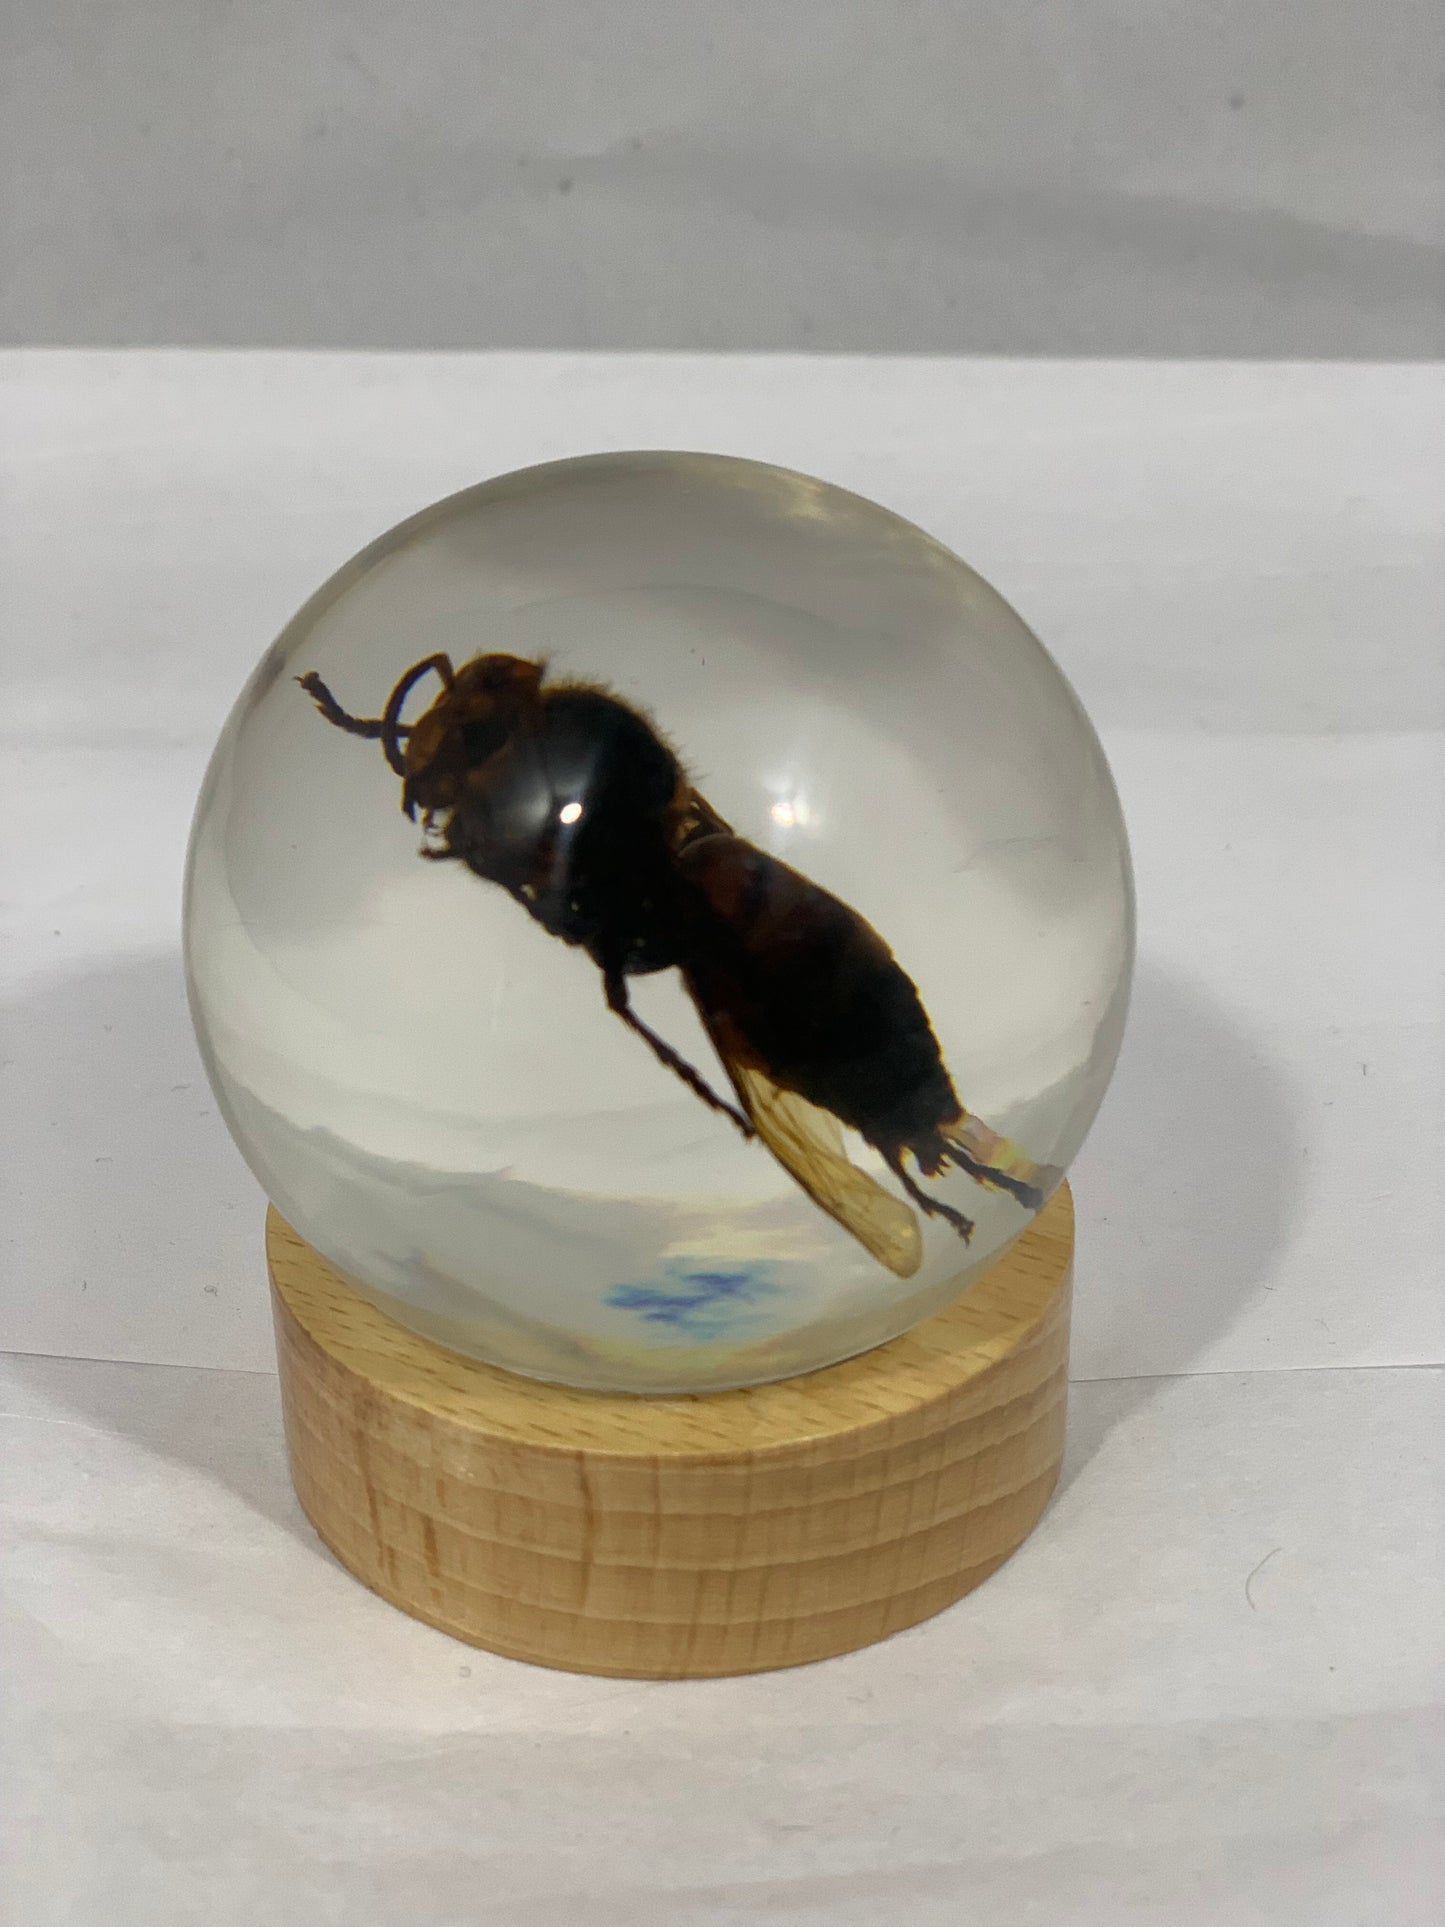 2.4" Unique and Rare Resin encased Asian giant hornet (Vespa mandarinia) Globe w/Wood Base